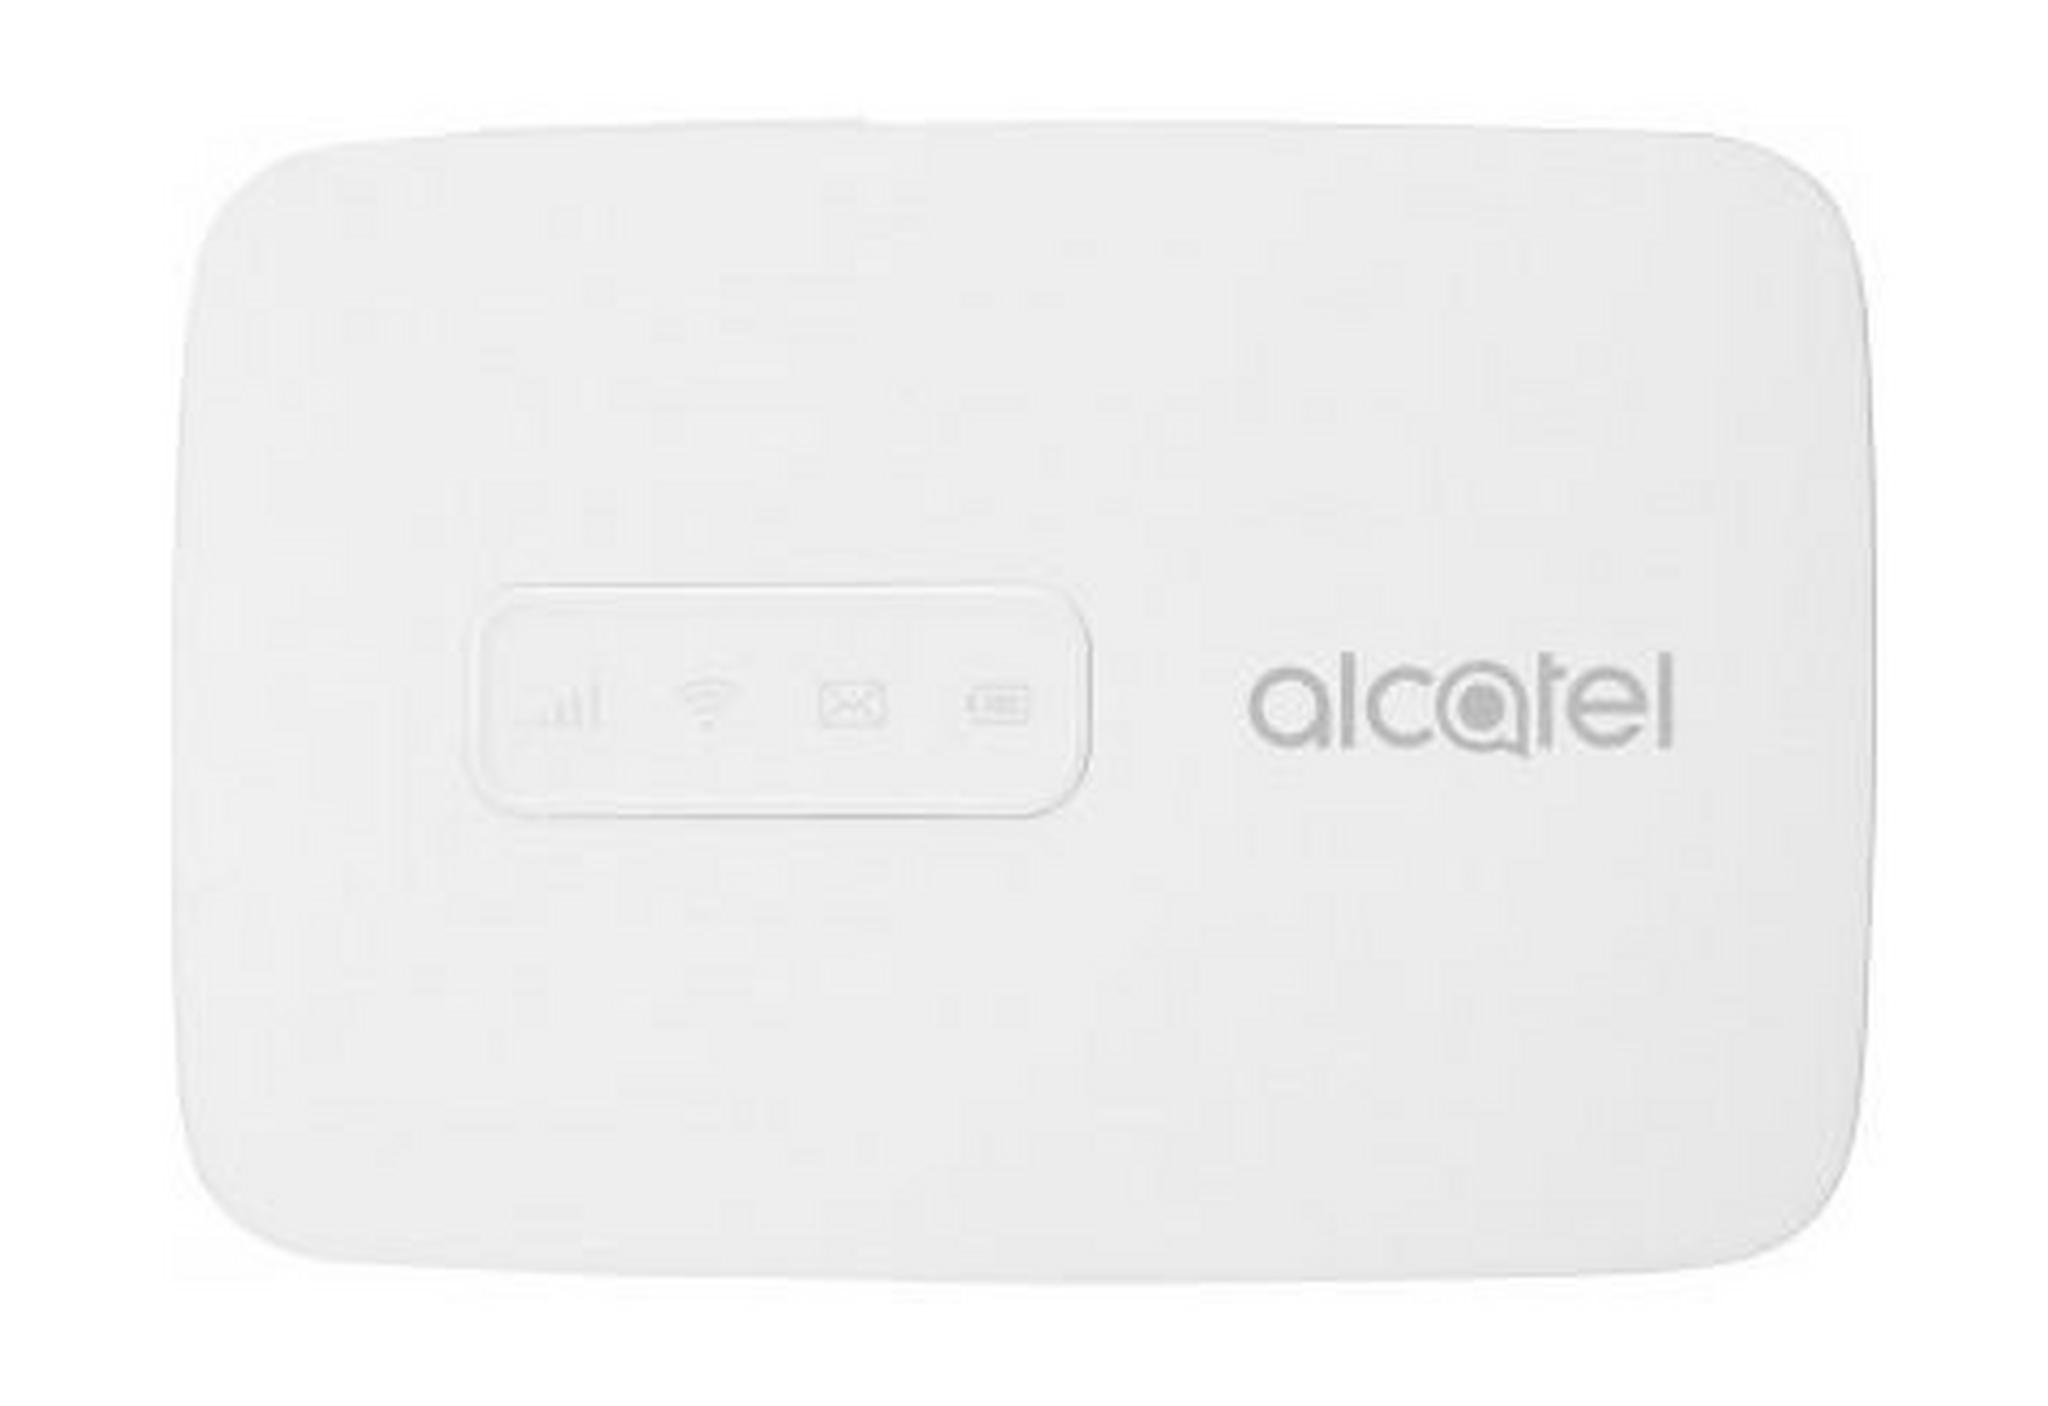 Alcatel LinkZone 4G LTE Wireless Router - White